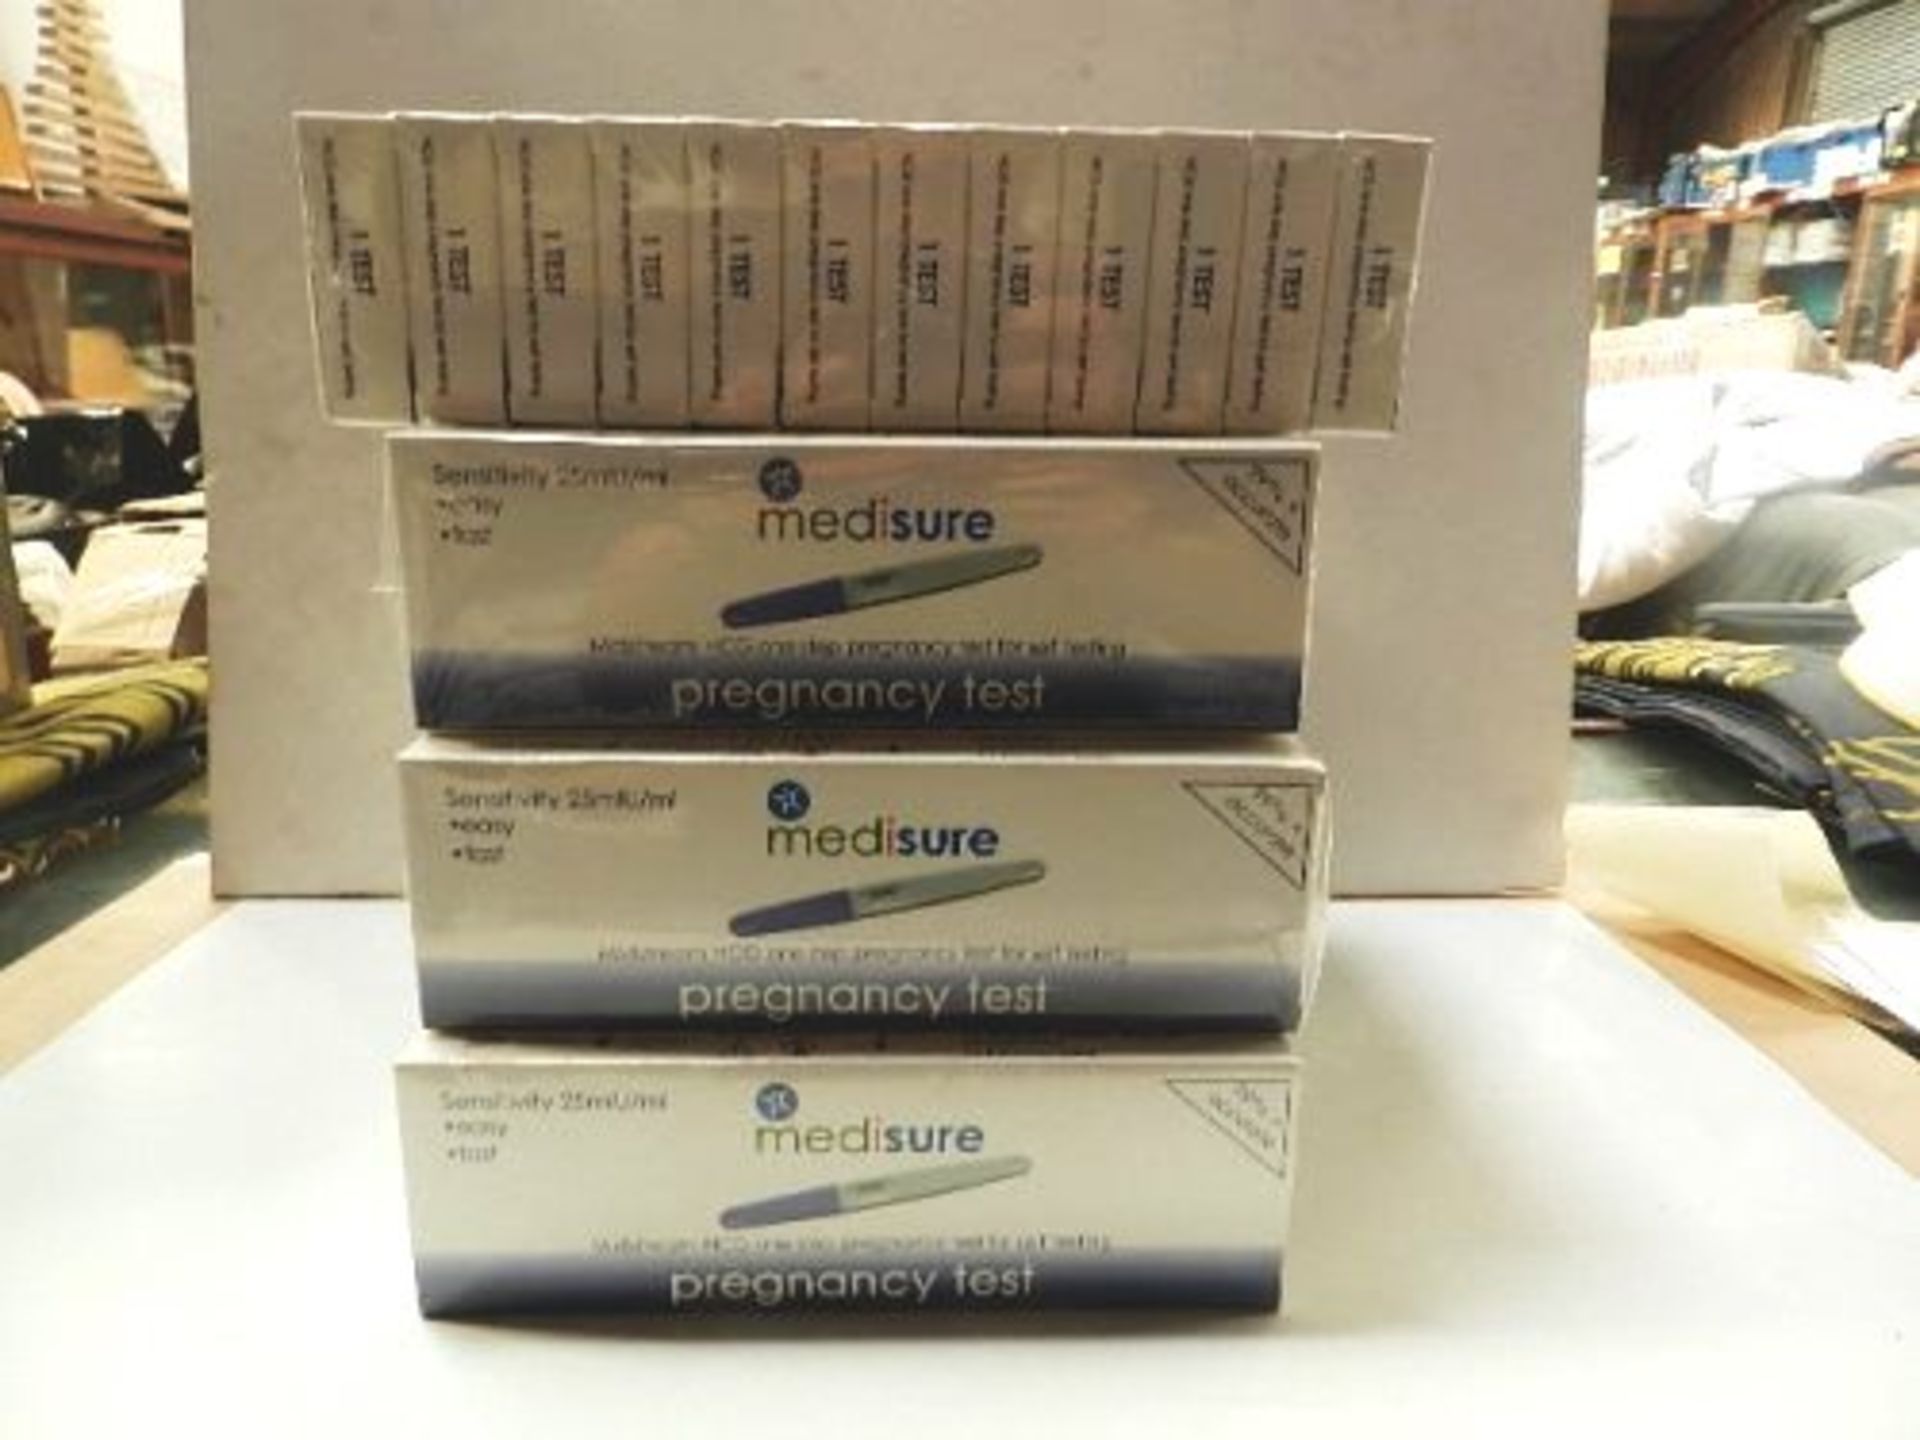 48 x Medisure Midstream HCG pregnancy tests, sensitivity 25mlu/ml, expires 09/06/2021 - Sealed new